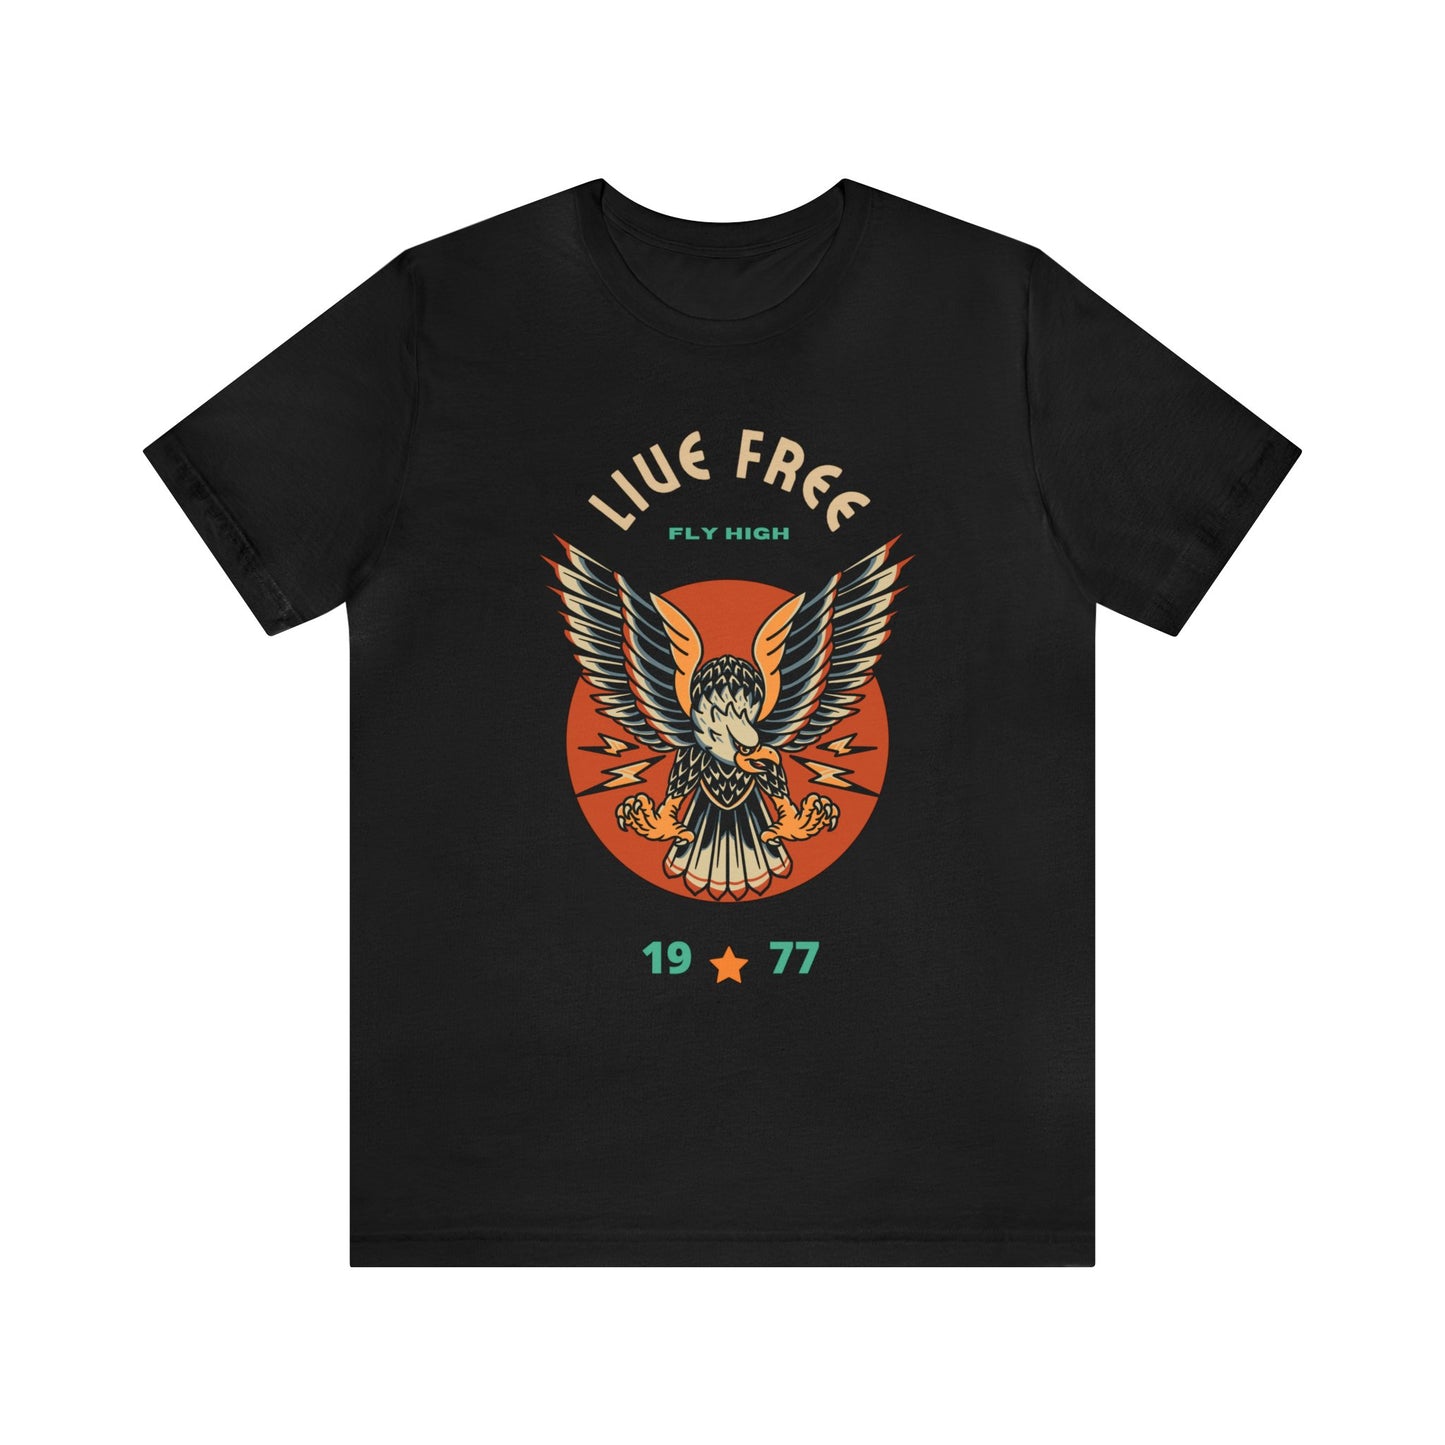 Live Free Tattoo T-shirt / Traditional Tattoo Tee Shirt / Punk Rock Clothing Tshirt Rockabilly Psychobilly Freak Goth - Foxlark Crystal Jewelry